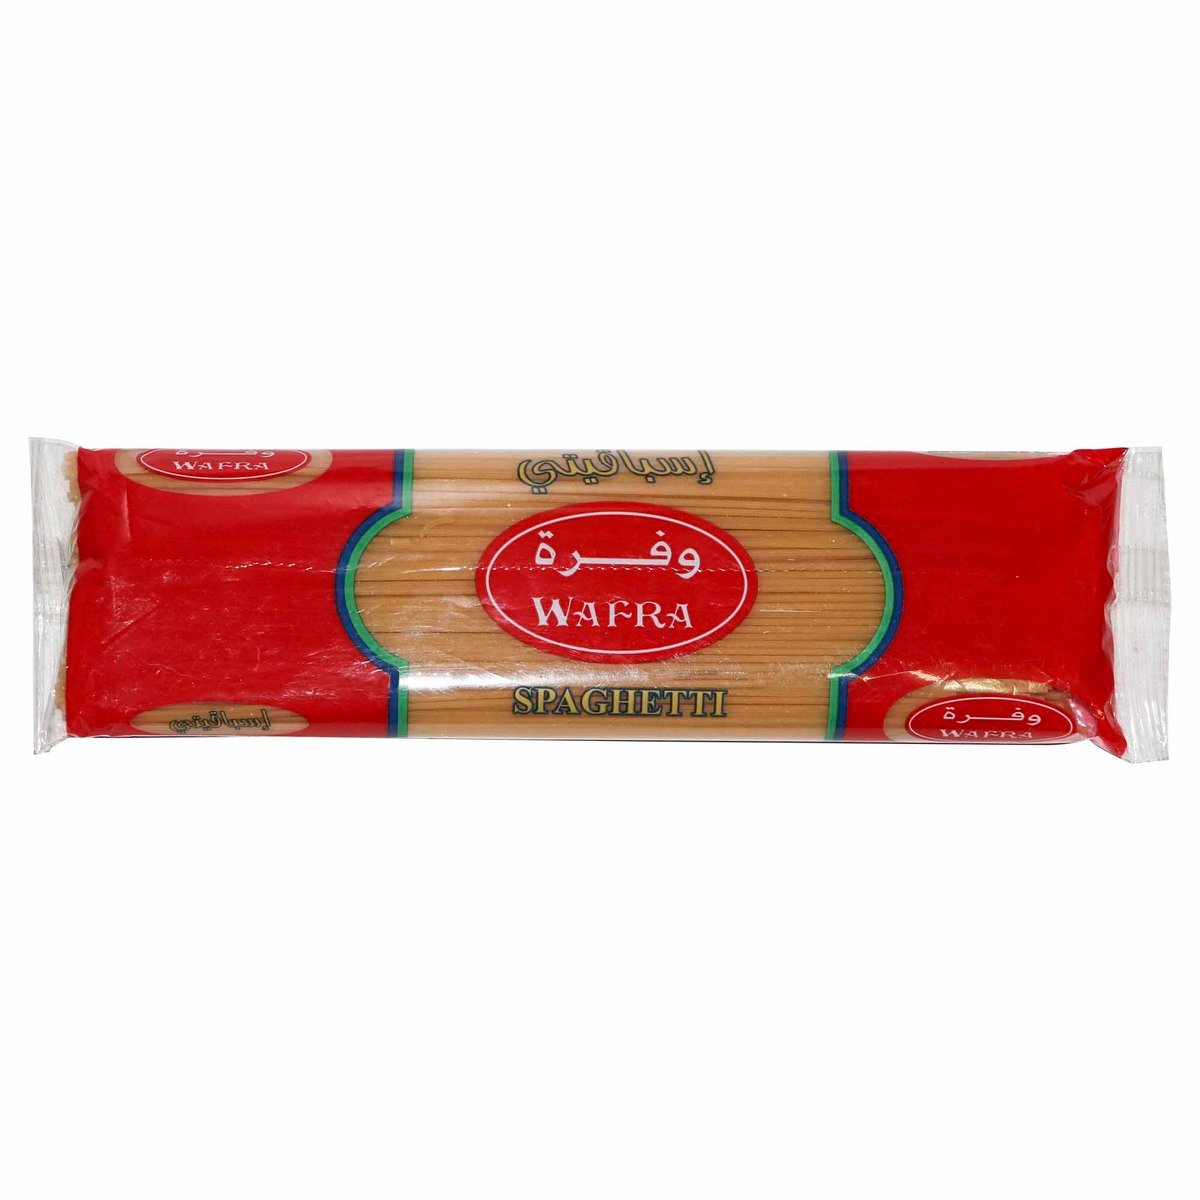 Wafra Spaghetti 400g